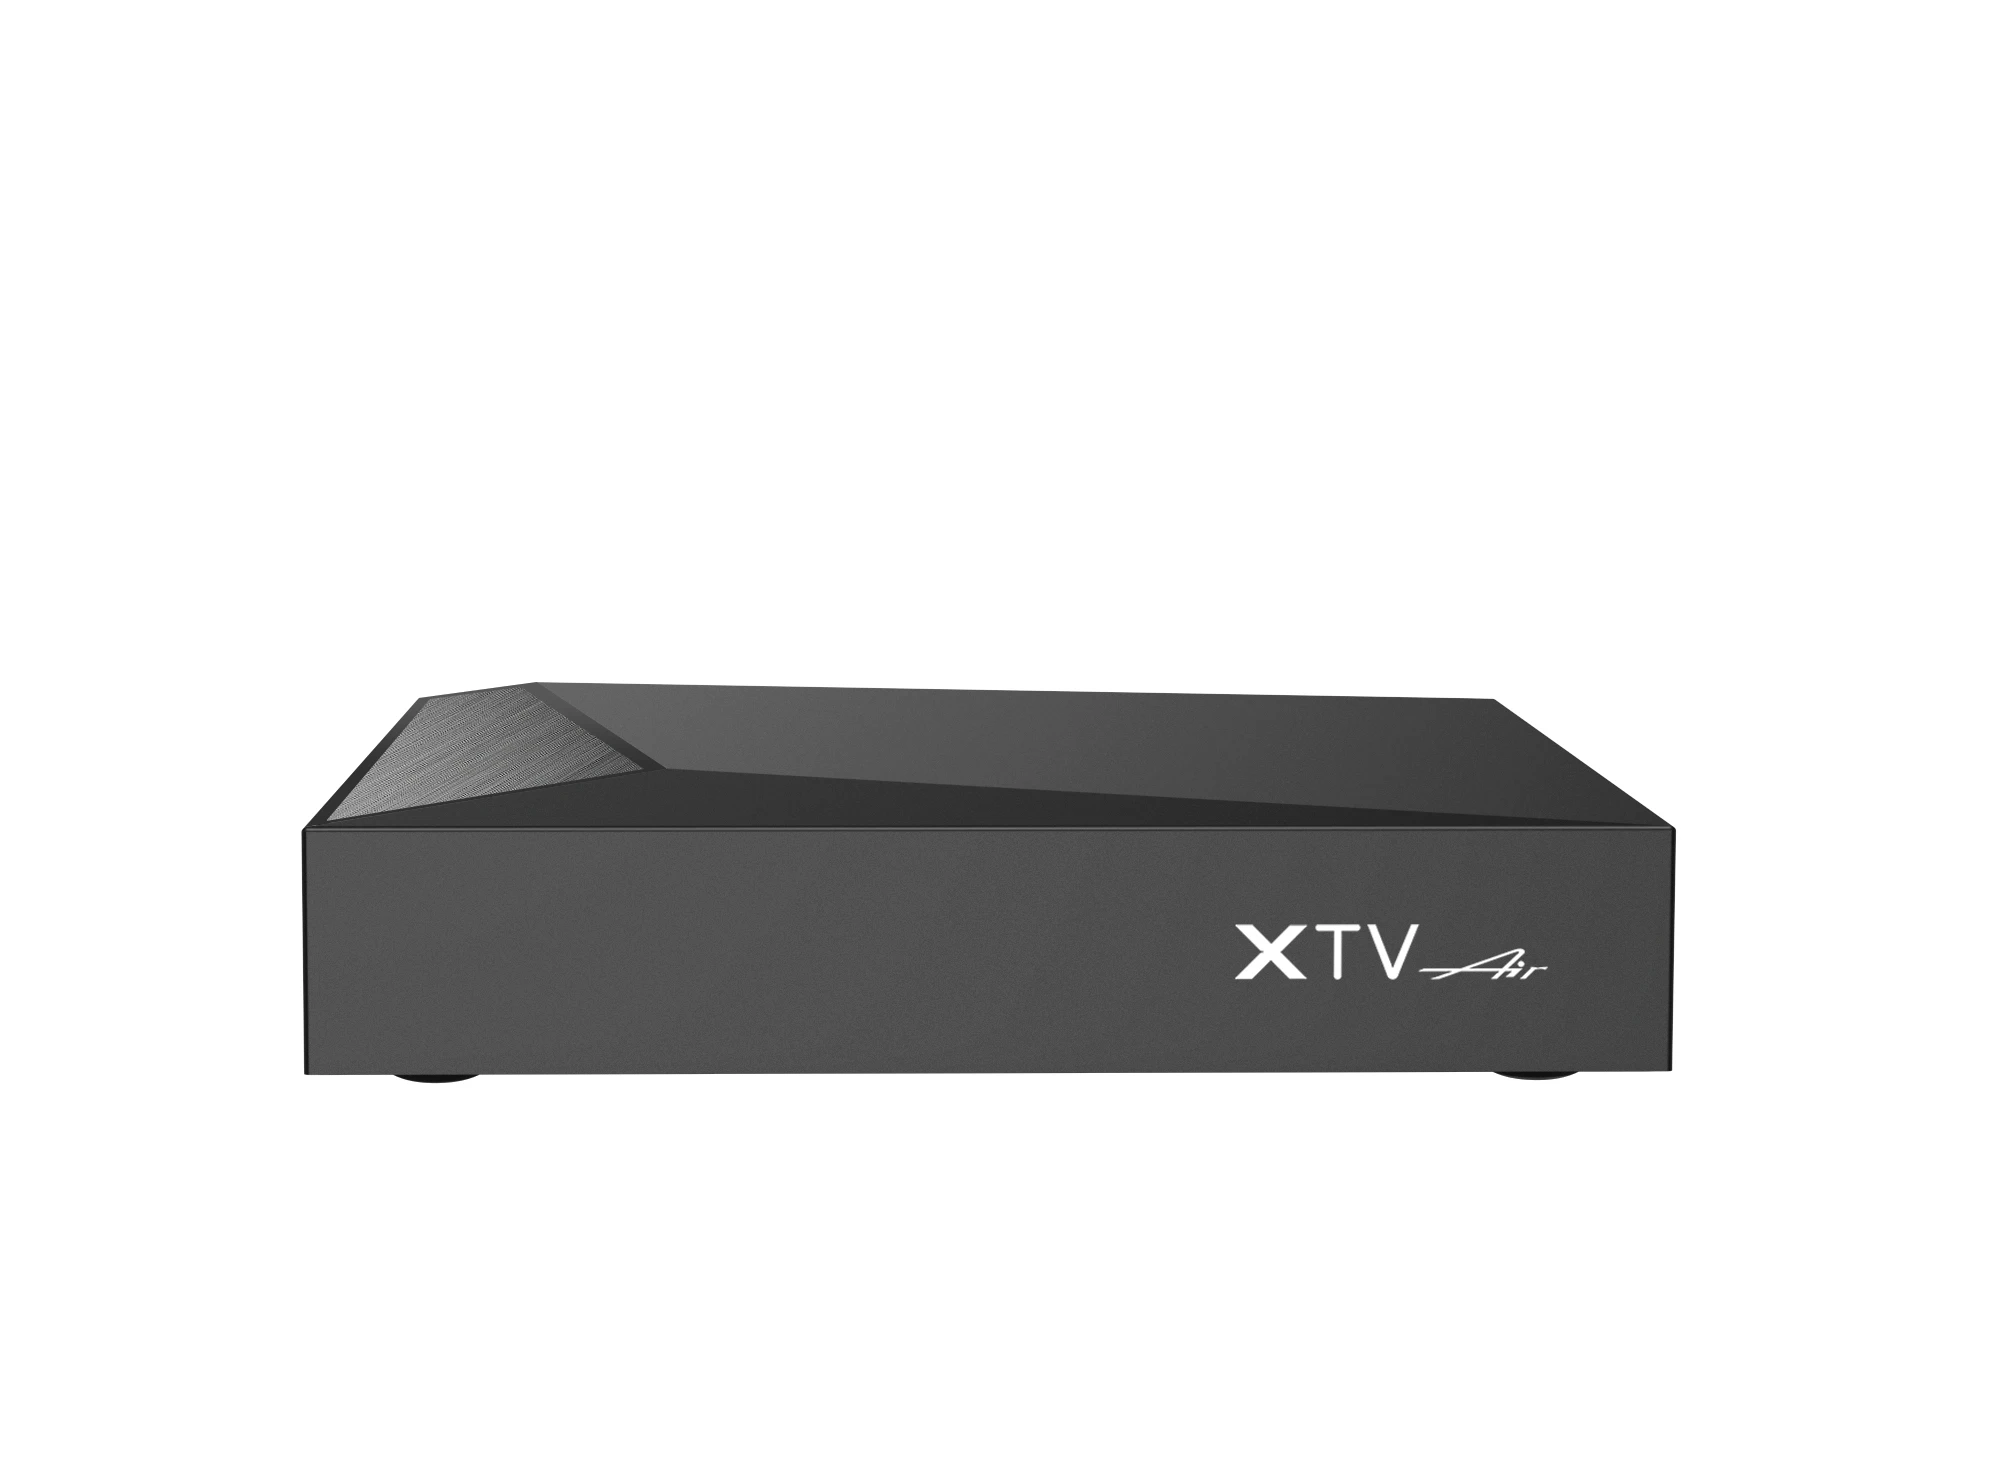 Caixa de TV inteligente XTV Air Amlogic, Amlogic S905W2, Quad Core, 1,8 GHz, HDR 4K + BT, LAN HD, 100m, AV1, Caixa de TV inteligente, Novo